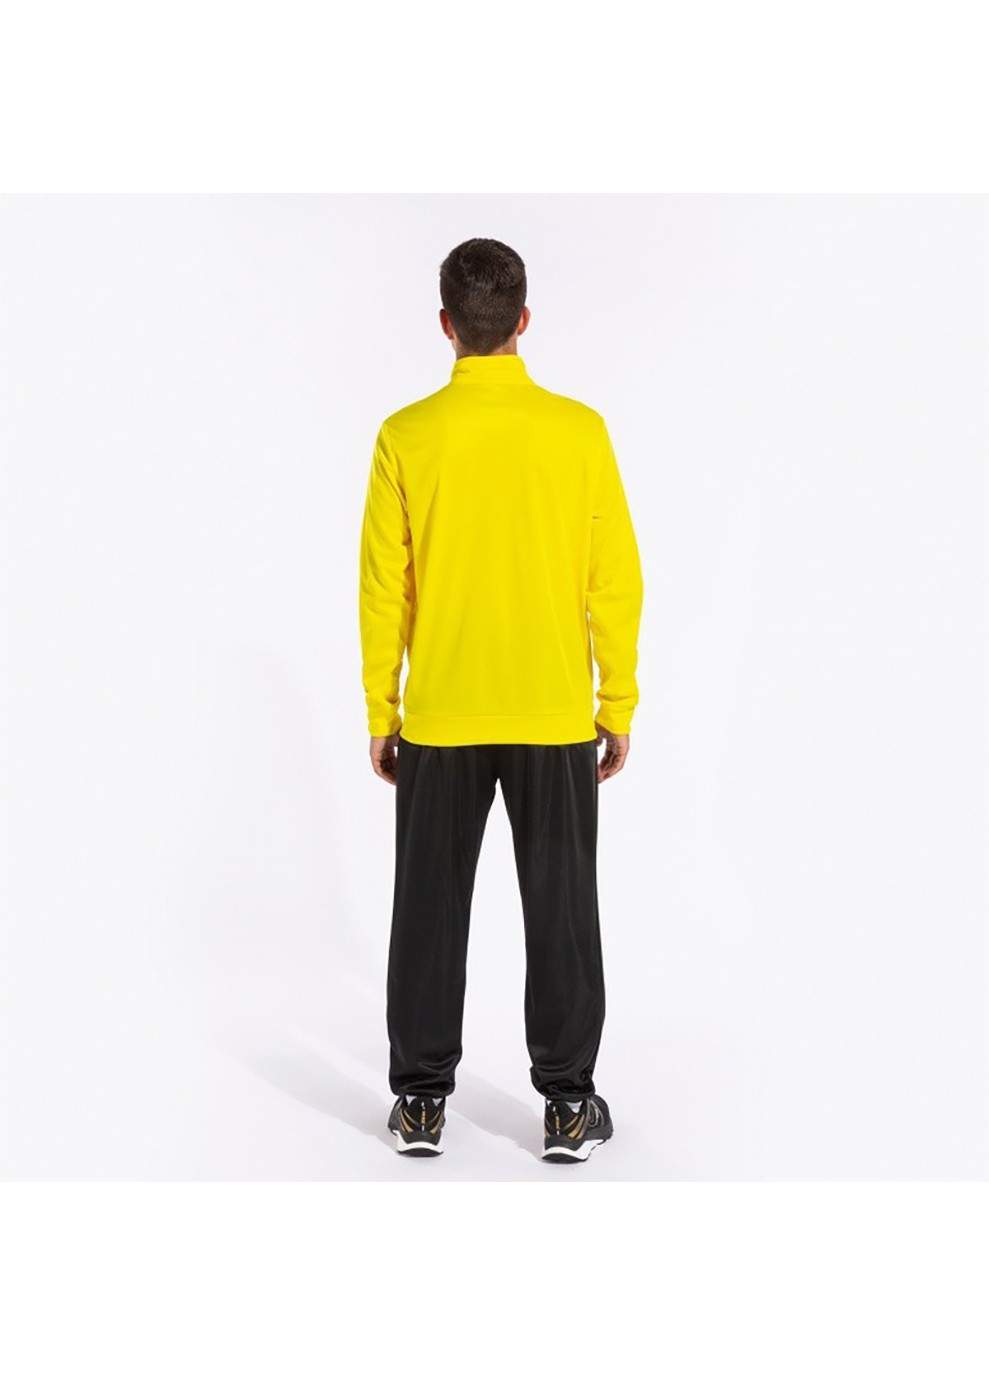 Спортивный костюм COLUMBUS TRACKSUIT желтый,чорный Joma (260646162)